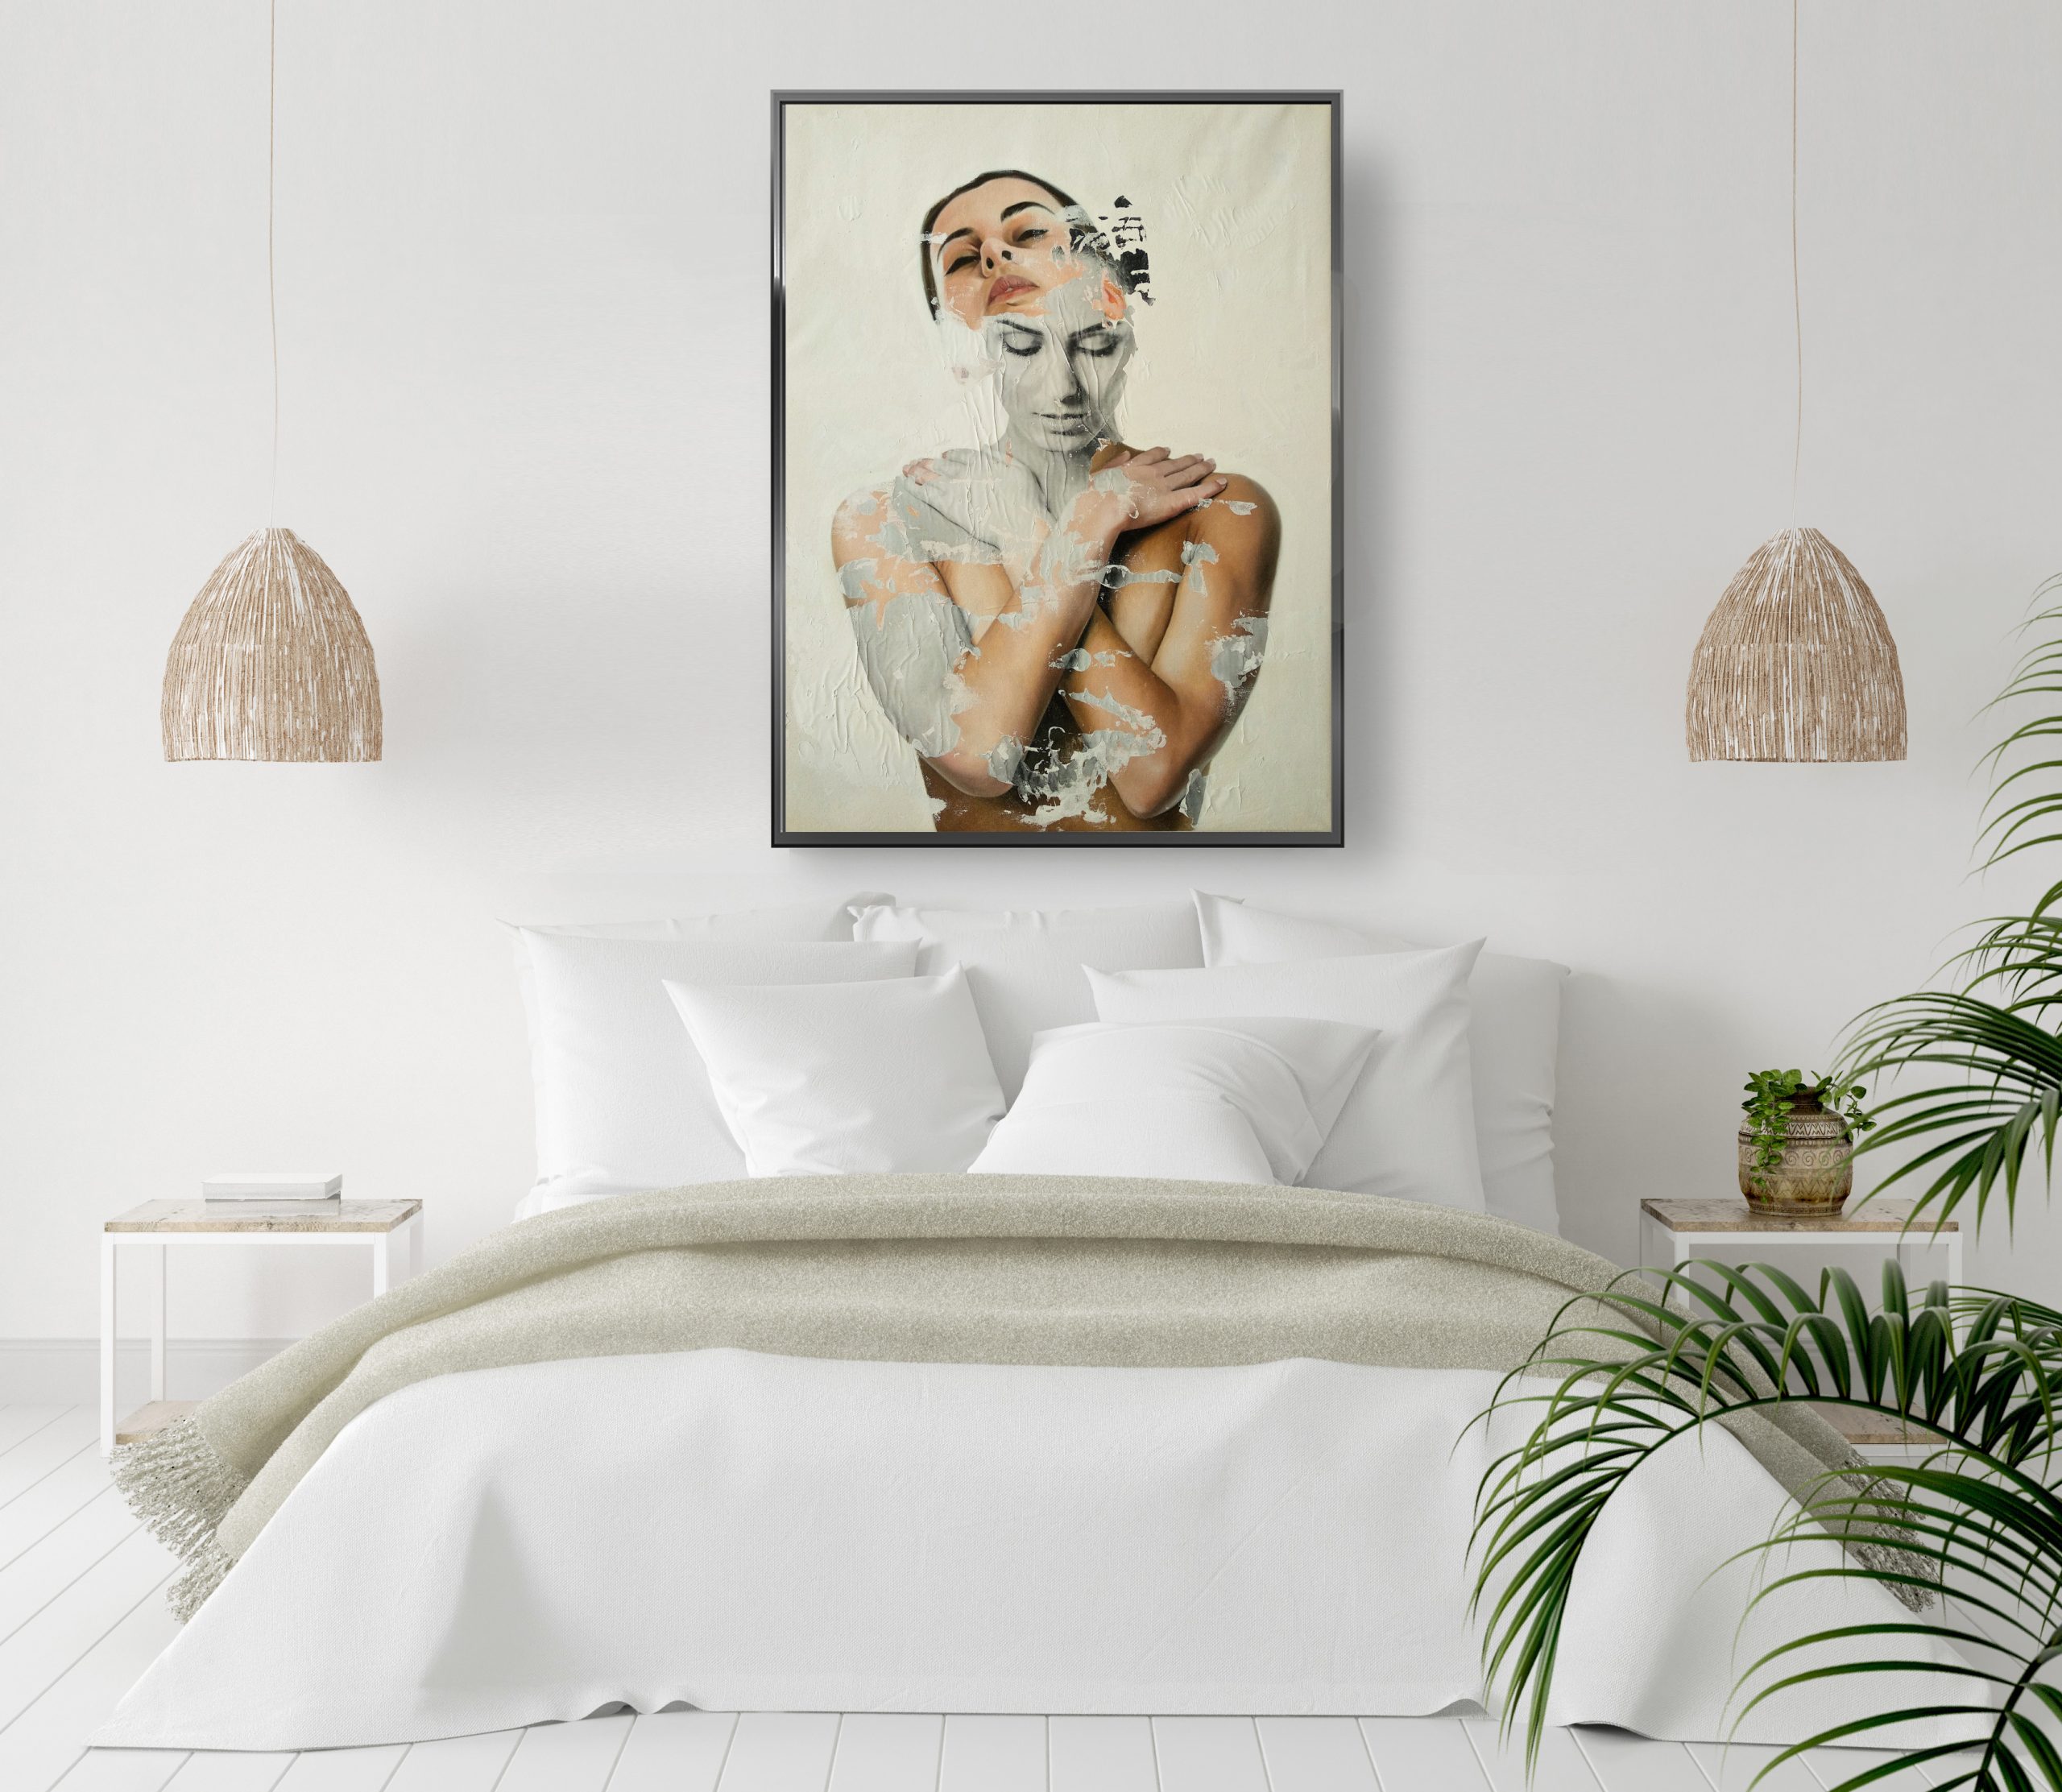 Pudicitiam, Raúl Lara mixed media and image transfer on canvas in bedroom, Scandinavian style, 3d render